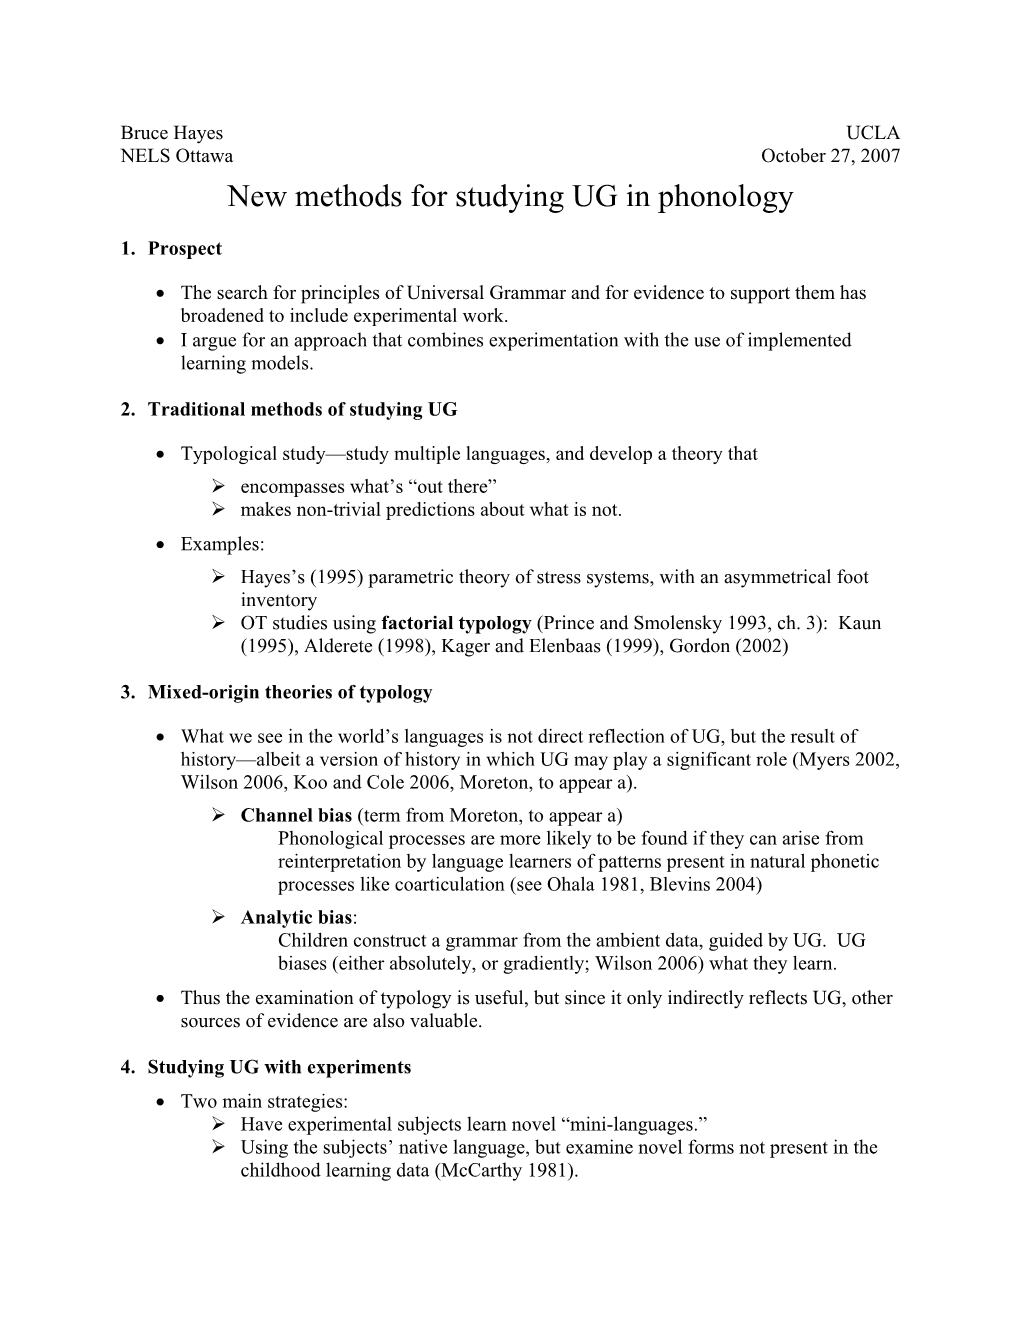 Bruce Hayes UCLA NELS Ottawa October 27, 2007 New Methods for Studying UG in Phonology